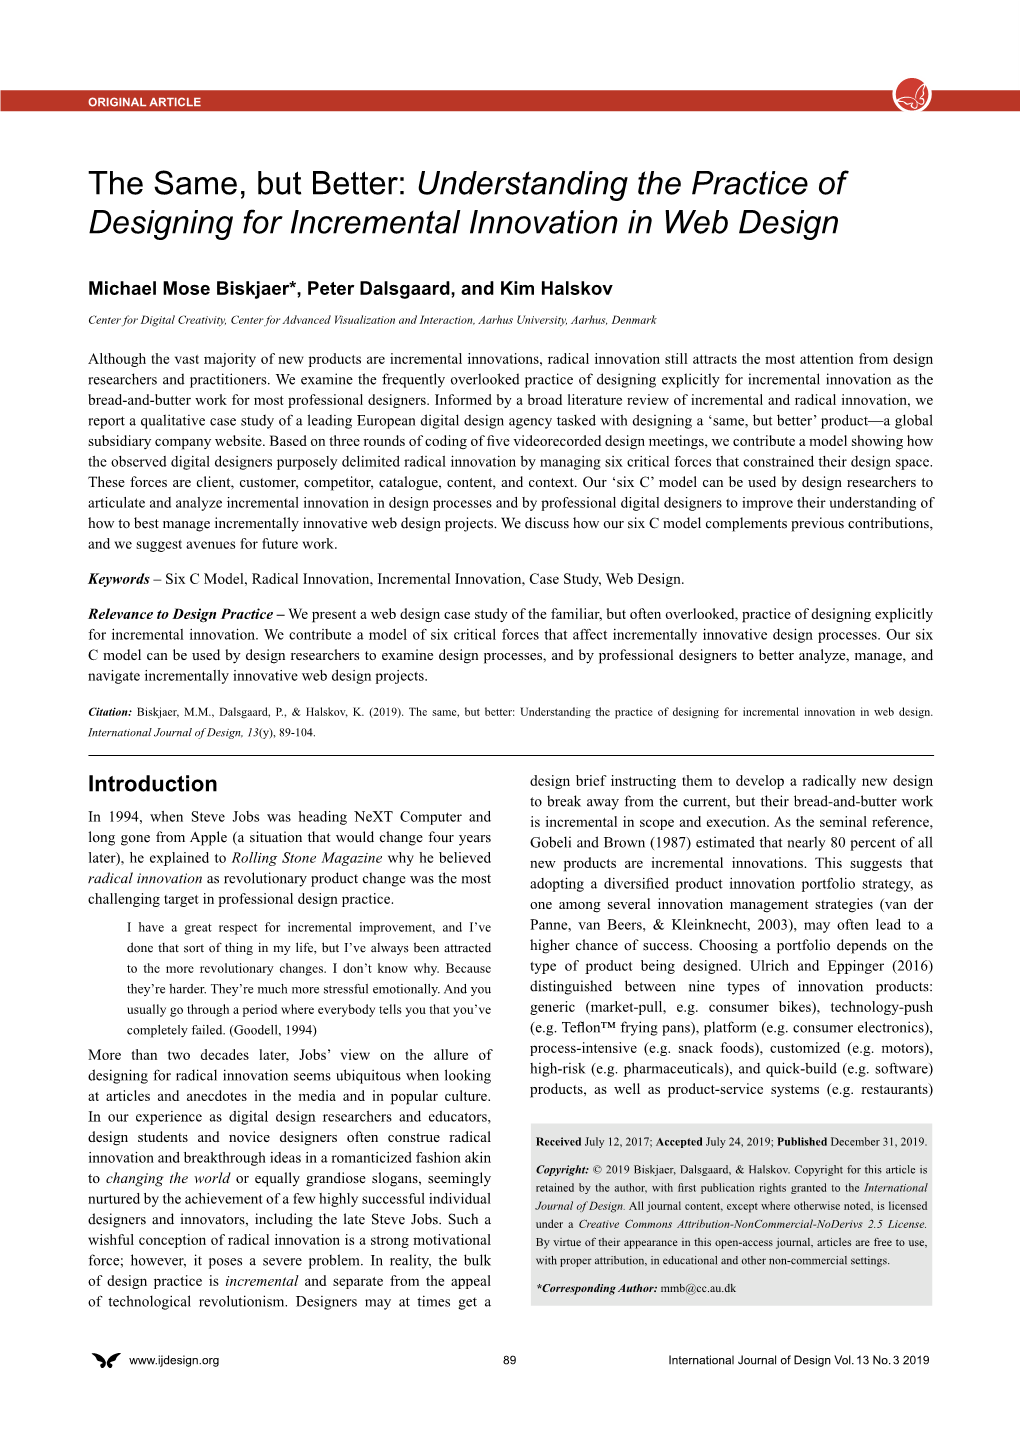 Understanding the Practice of Designing for Incremental Innovation in Web Design